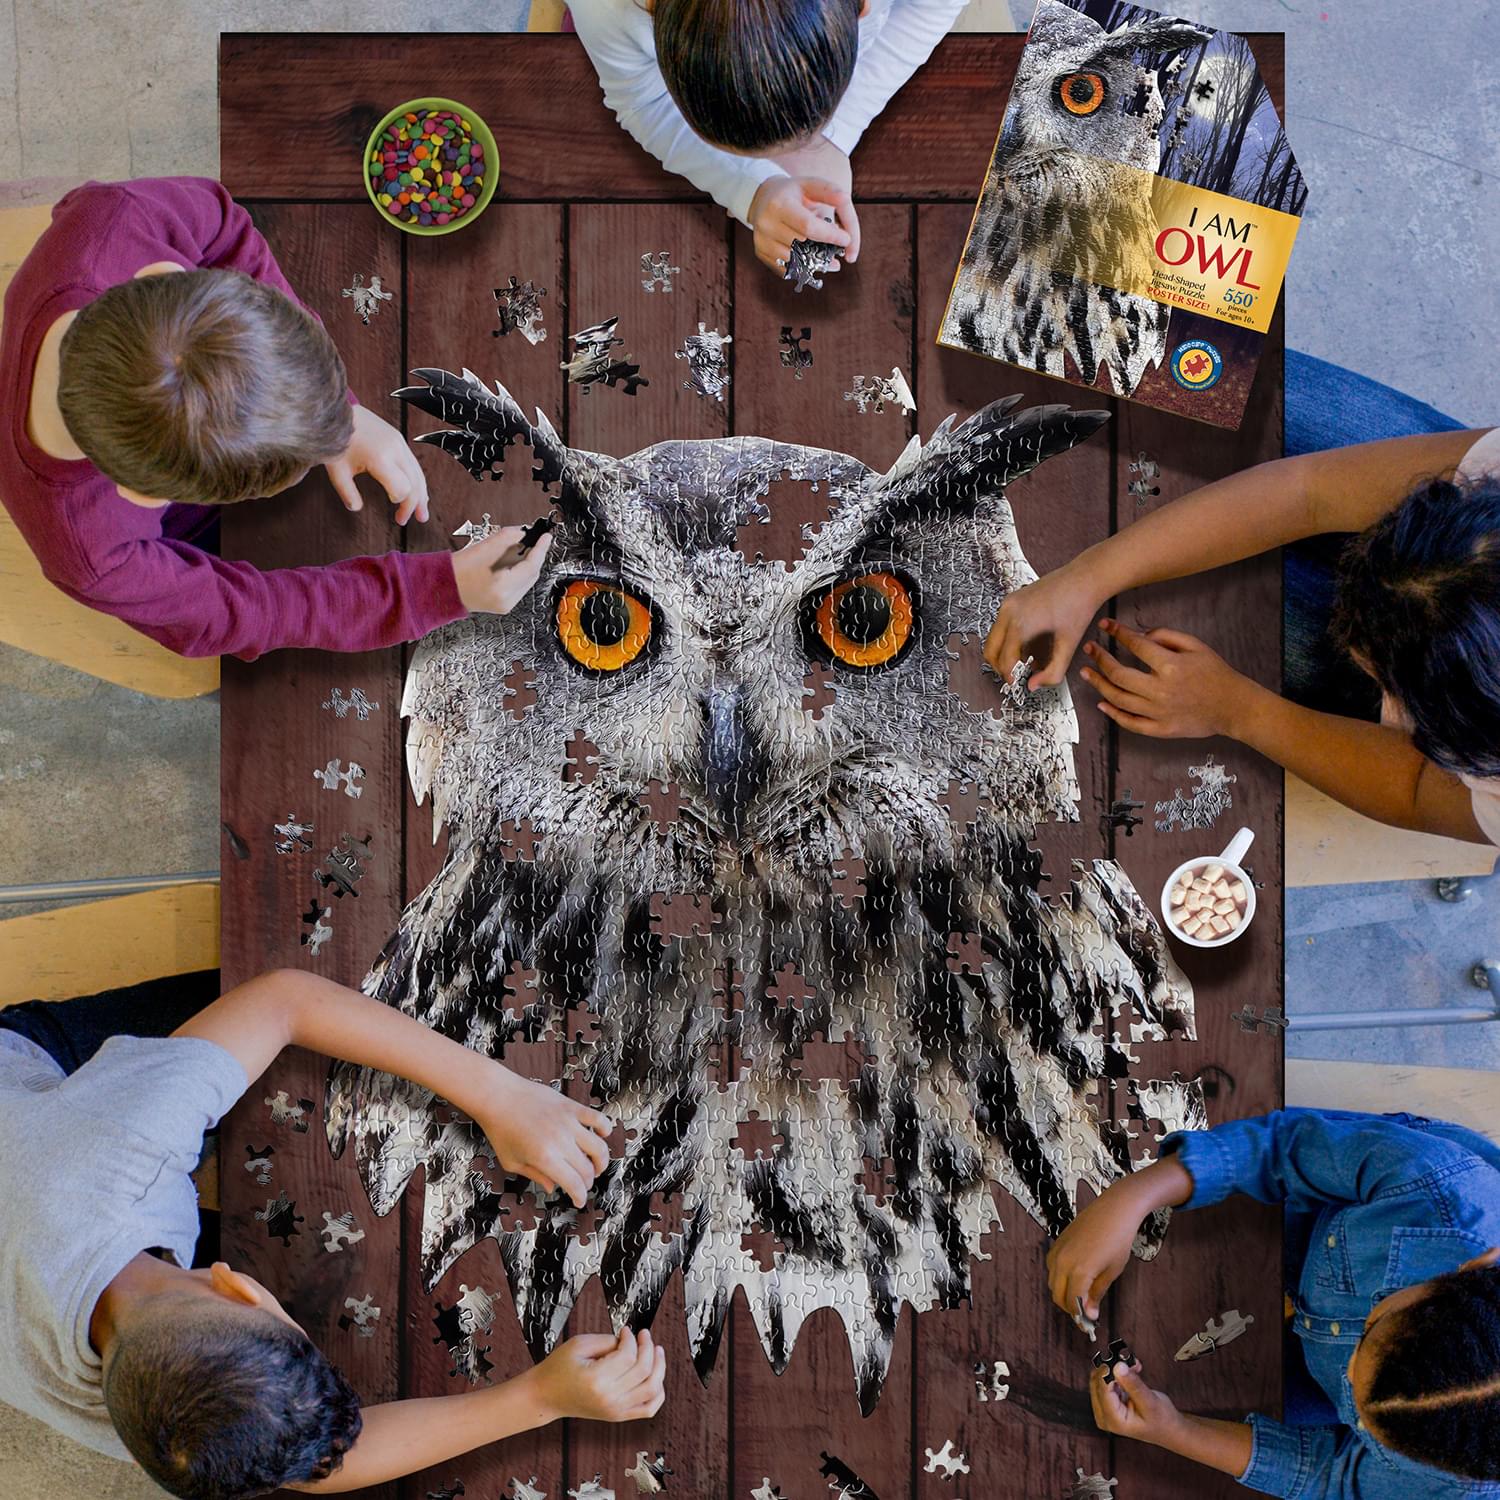 I AM Owl 550 Piece Animal Head-Shaped Jigsaw Puzzle